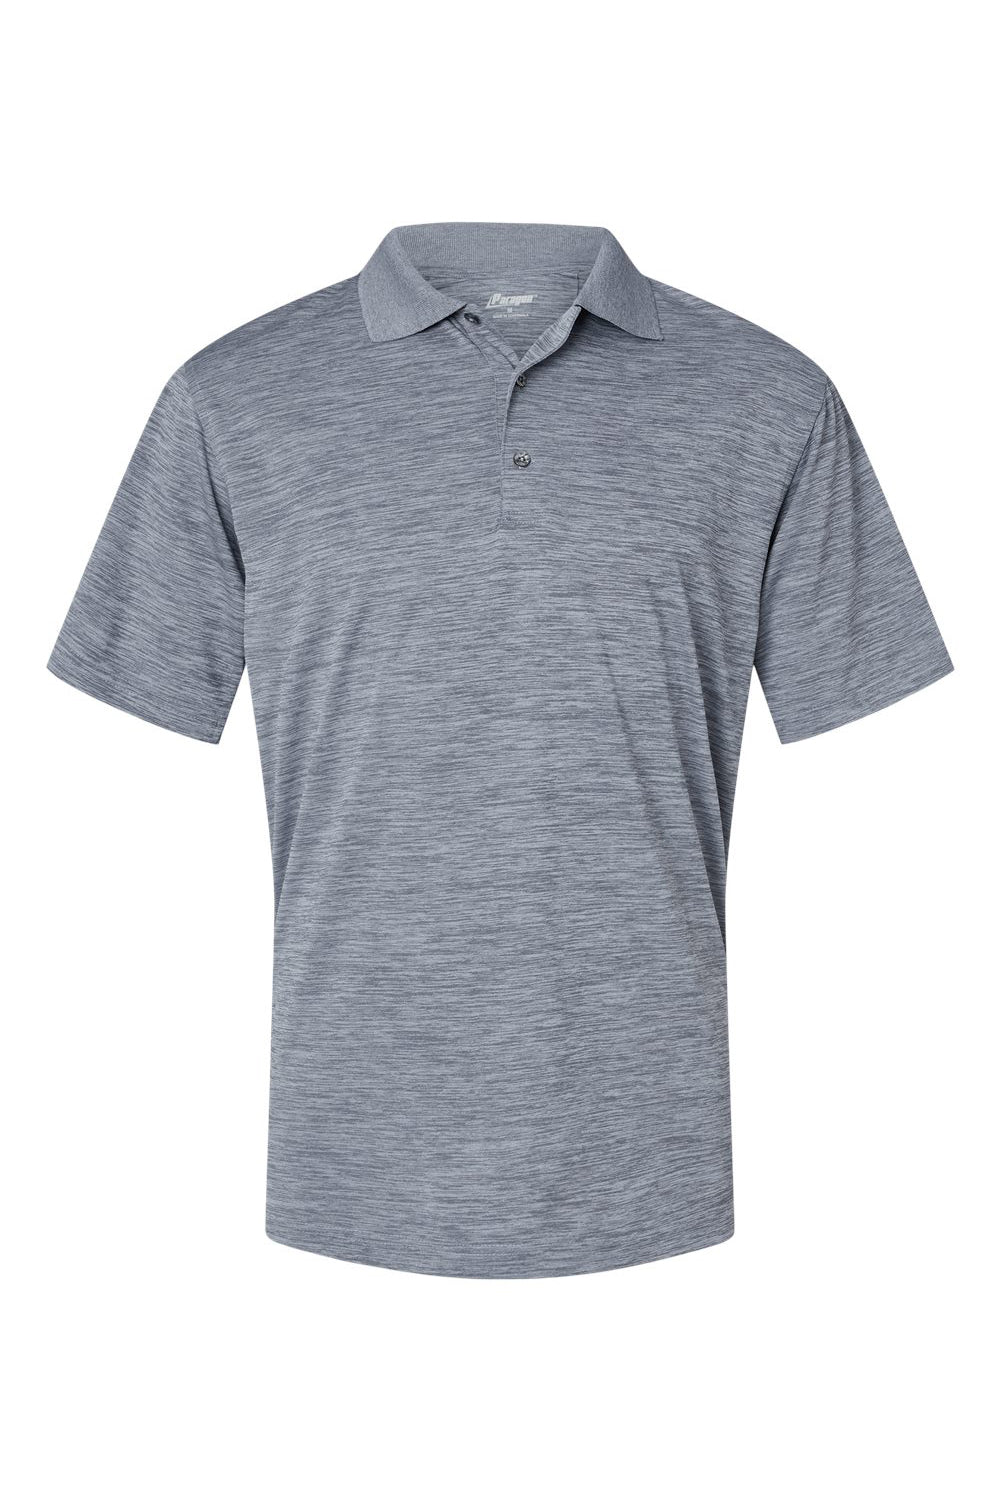 Paragon 130 Mens Dakota Striated Short Sleeve Polo Shirt Heather Steel Grey Flat Front